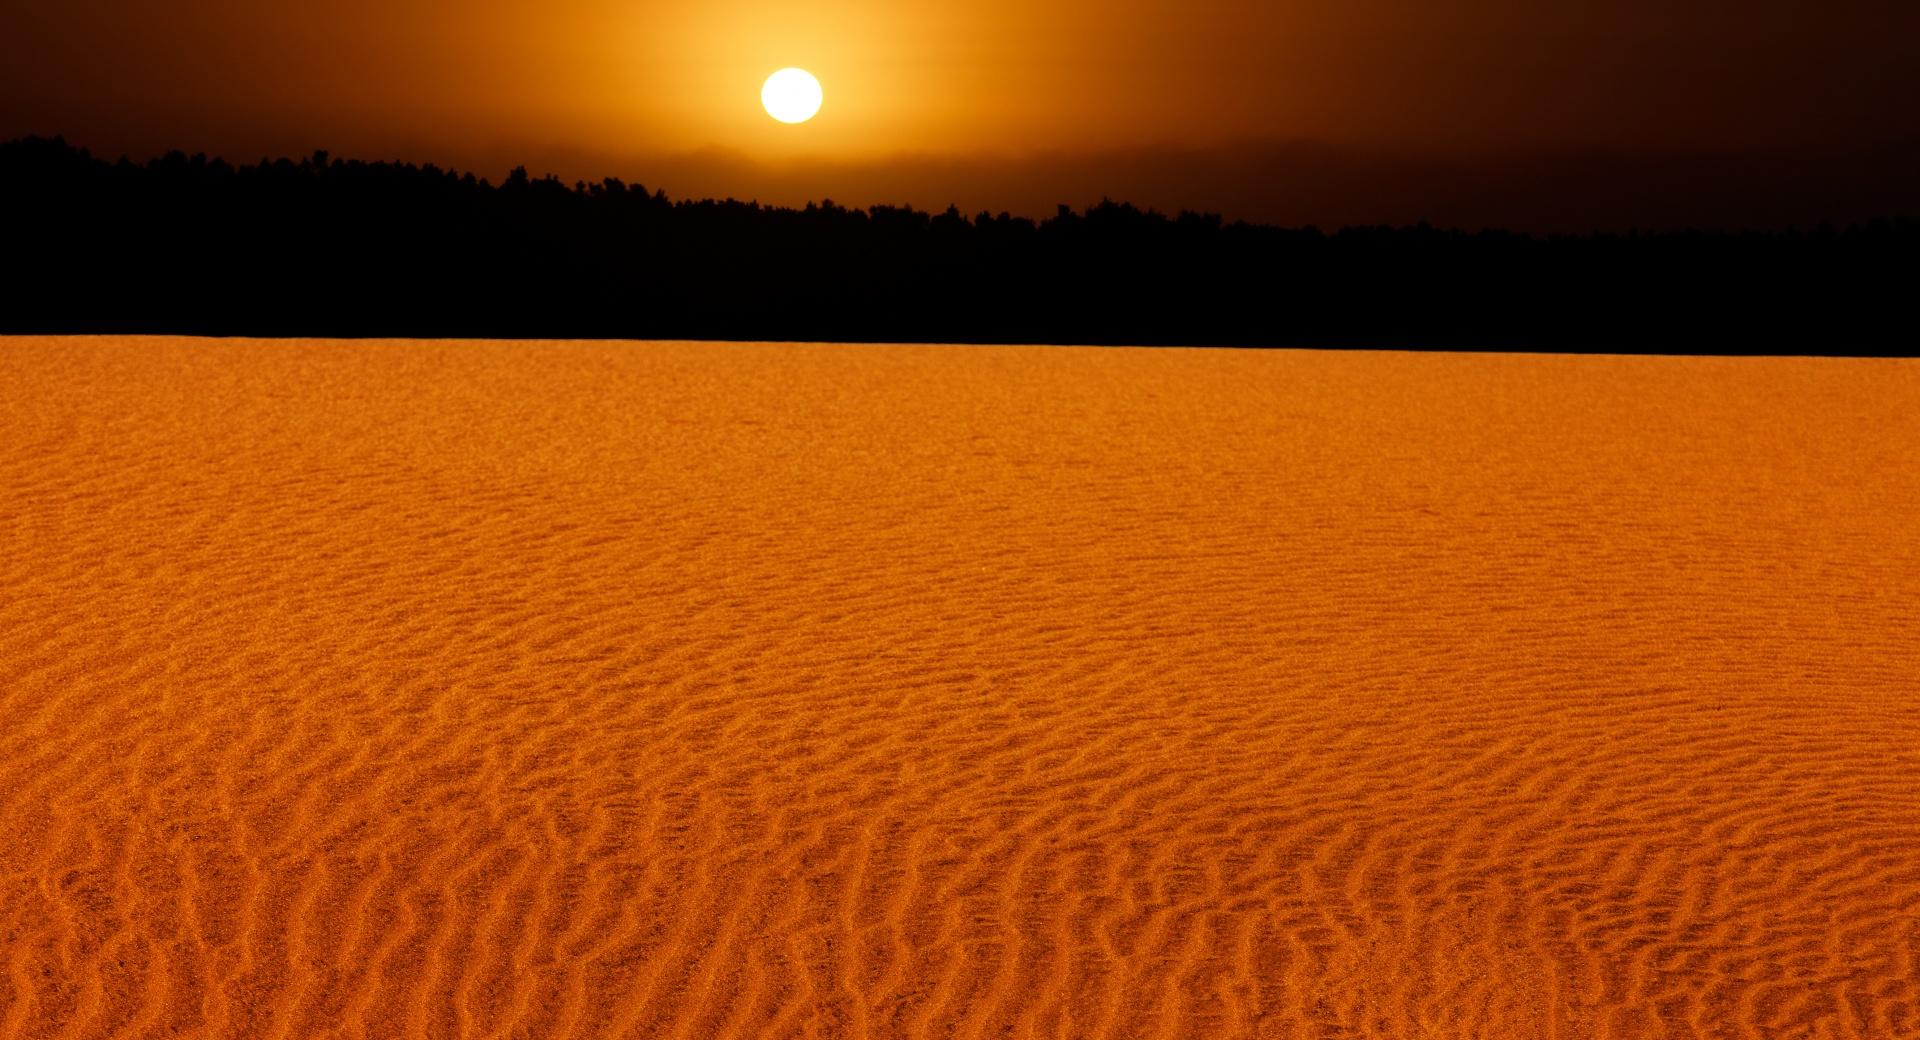 Sand Dunes Miramar Argentina at 1024 x 1024 iPad size wallpapers HD quality